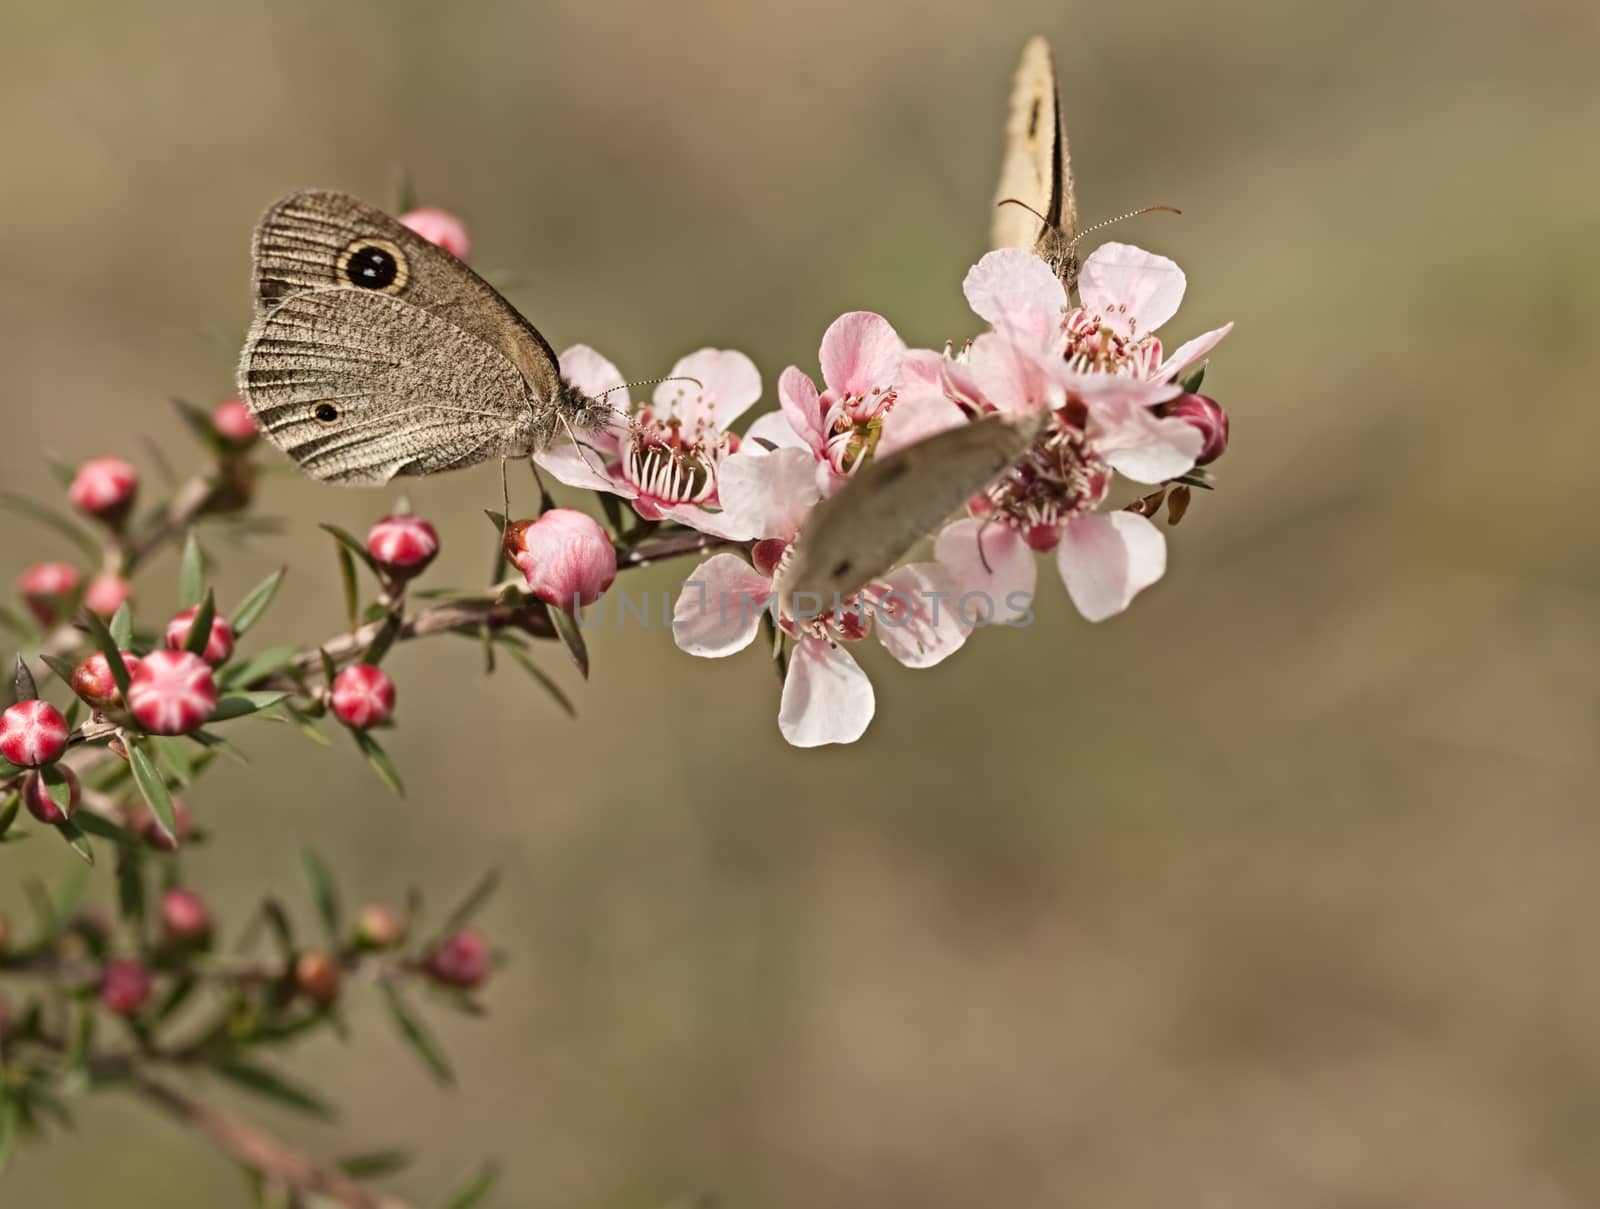 Australian Dingy Ring or Dusky Knight Ypthima arctous butterfly on native wildflower leptospernum pink cascade flowers